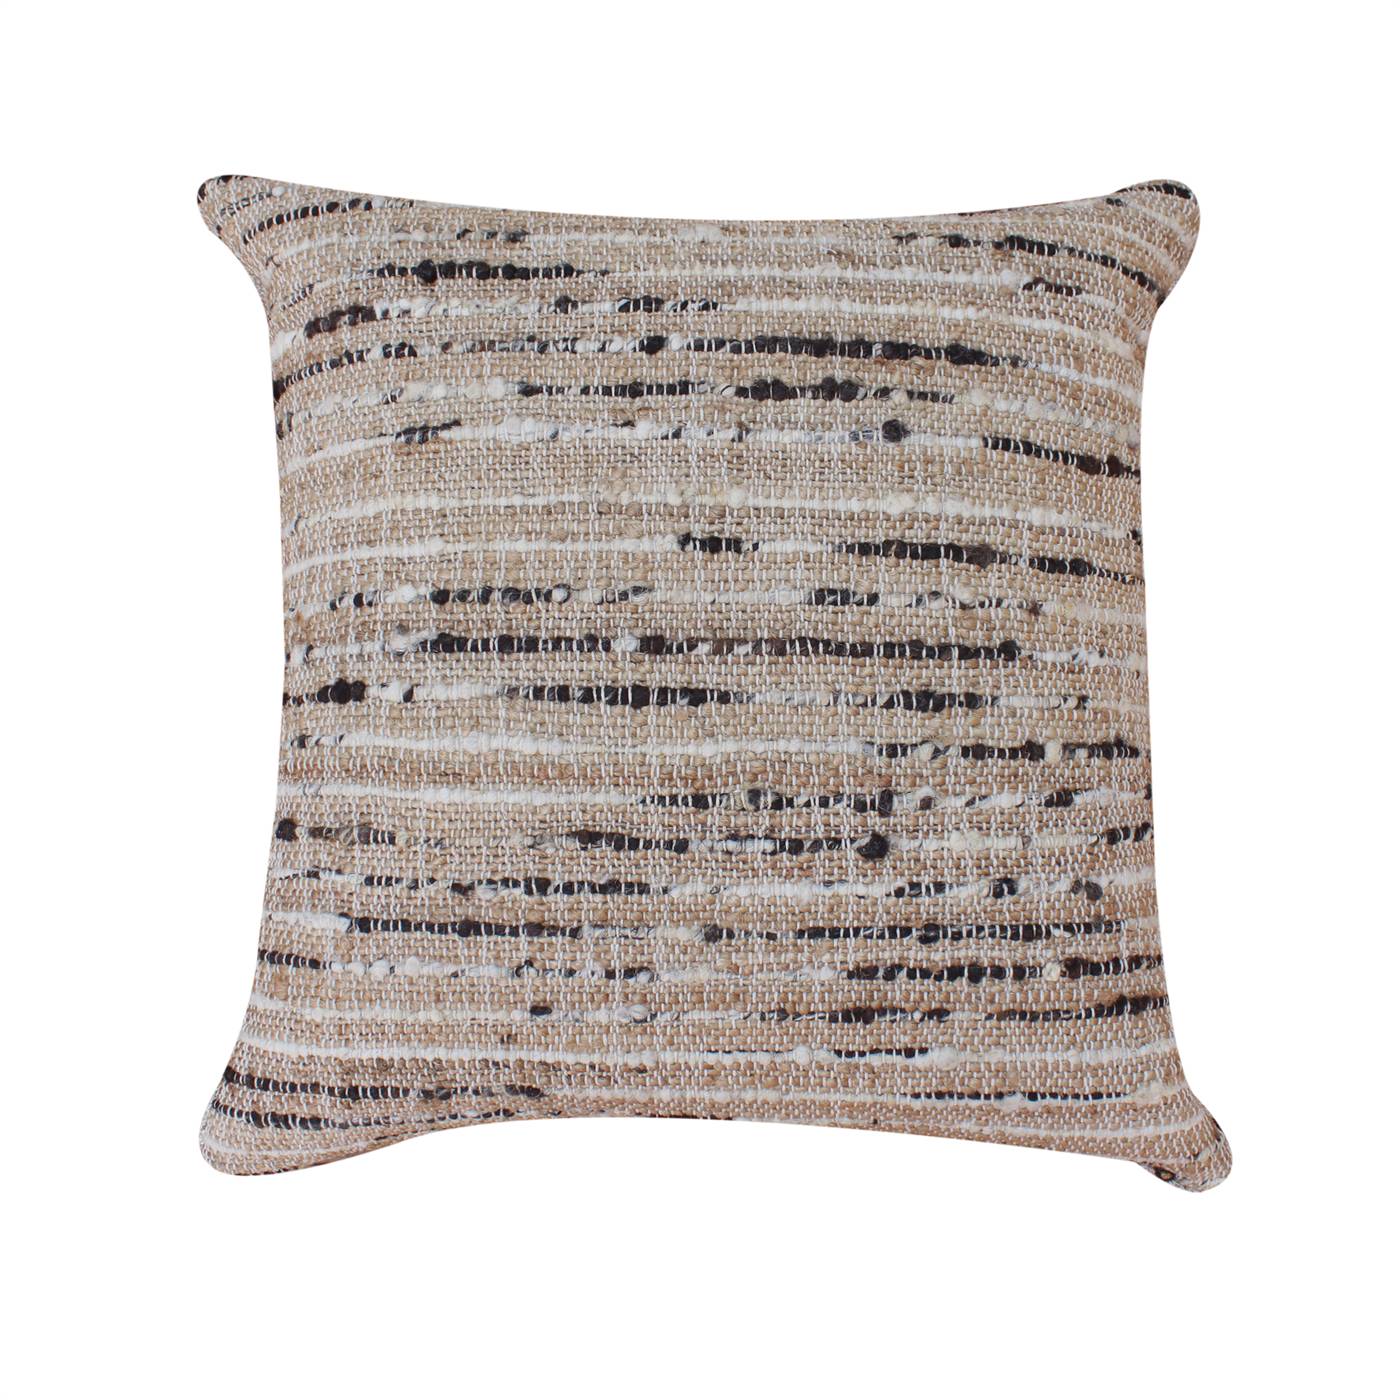 Bolsover Cushion, 56x56 cm, Natural, Brown, Jute, Wool, Punja Kelim, Punja, Flat Weave